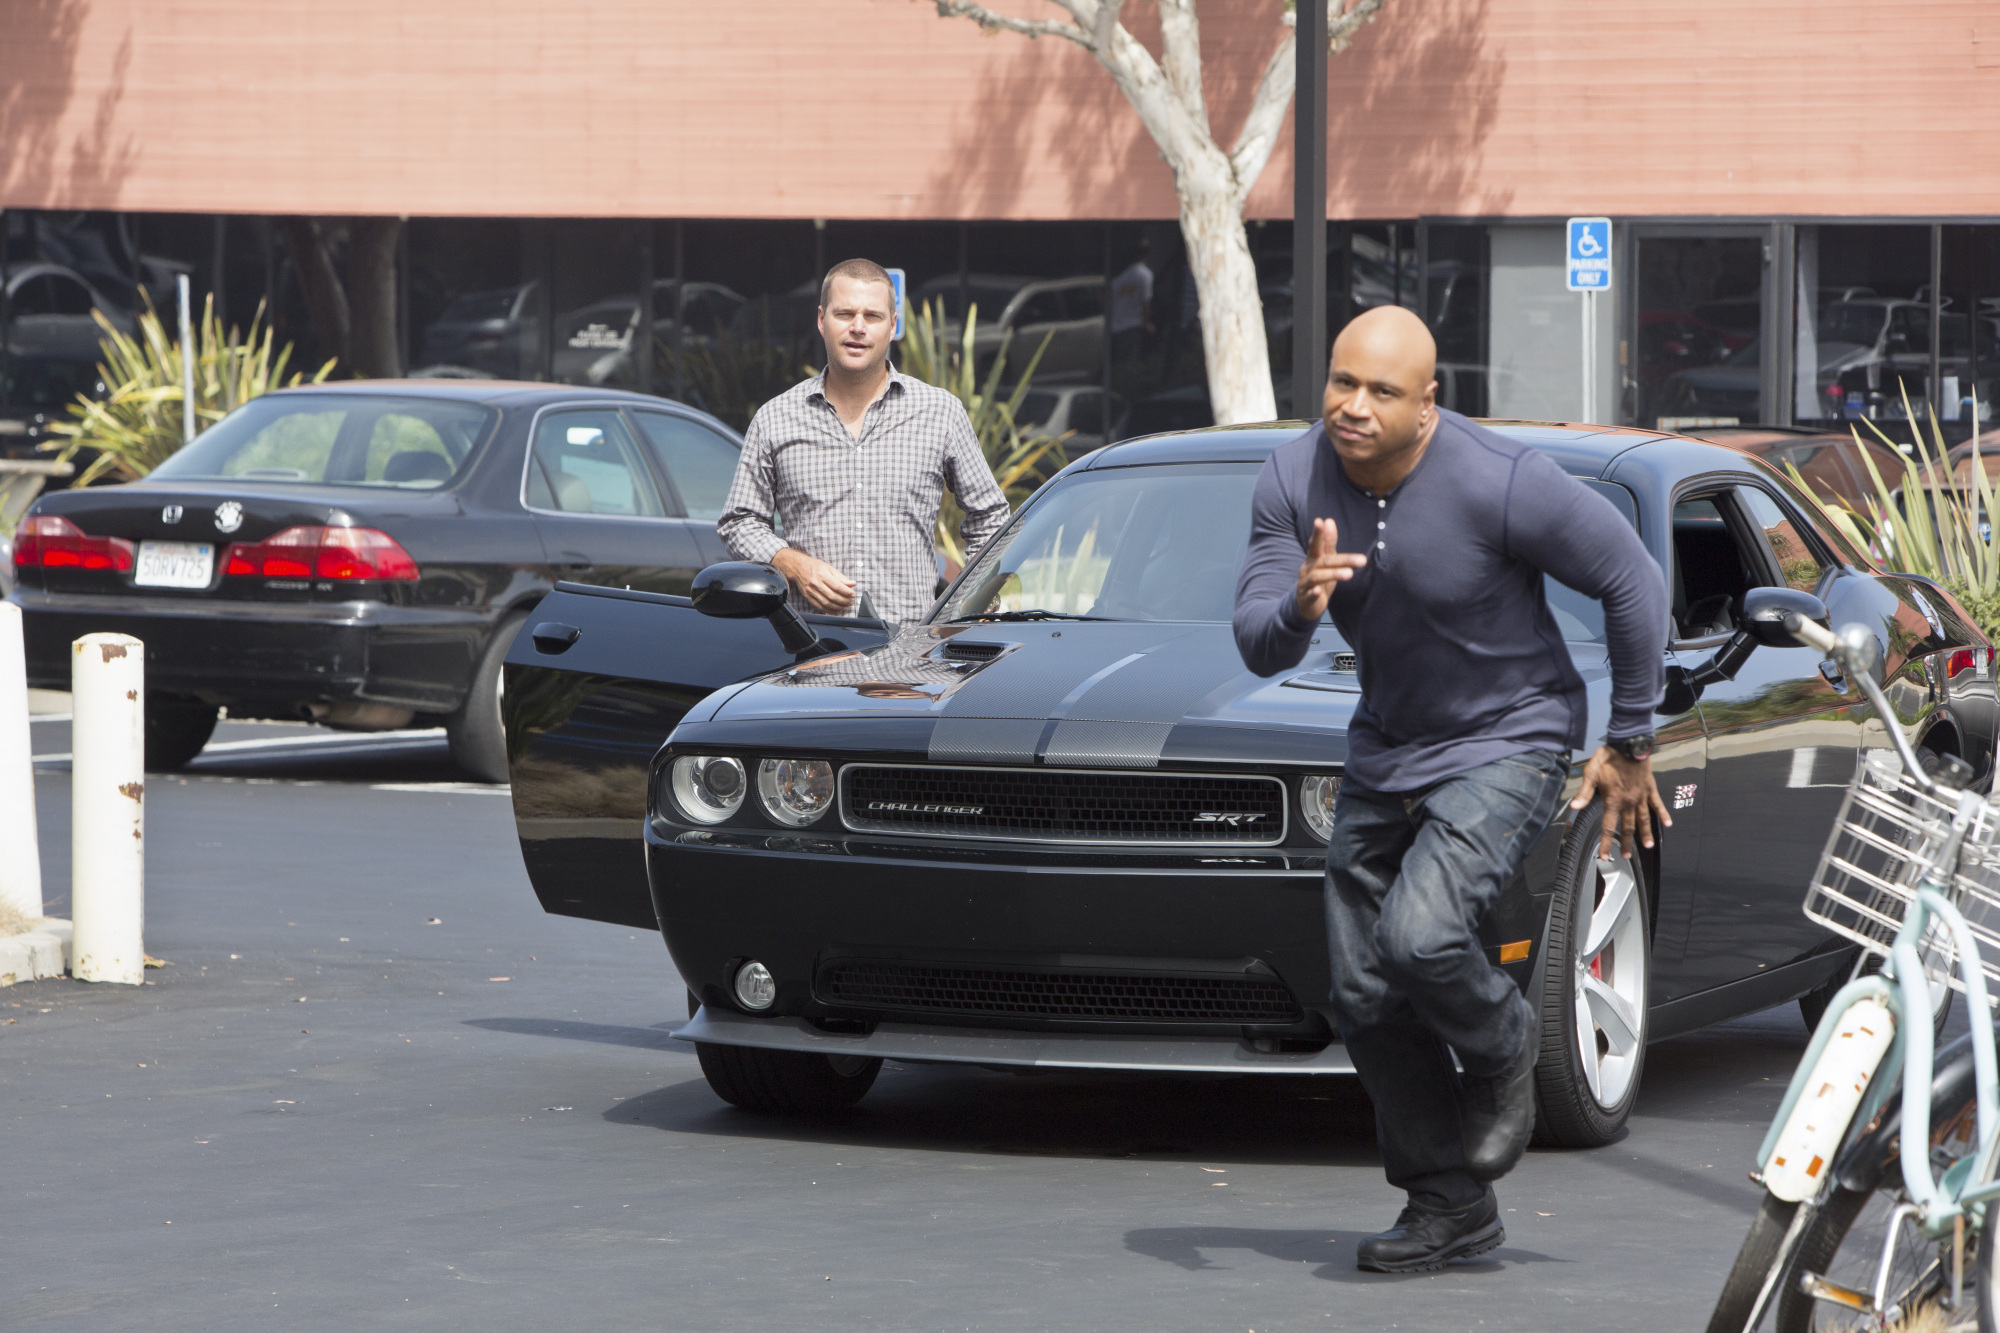 NCIS Los Angeles Season Five Episode Three "Omni" Promo Picture